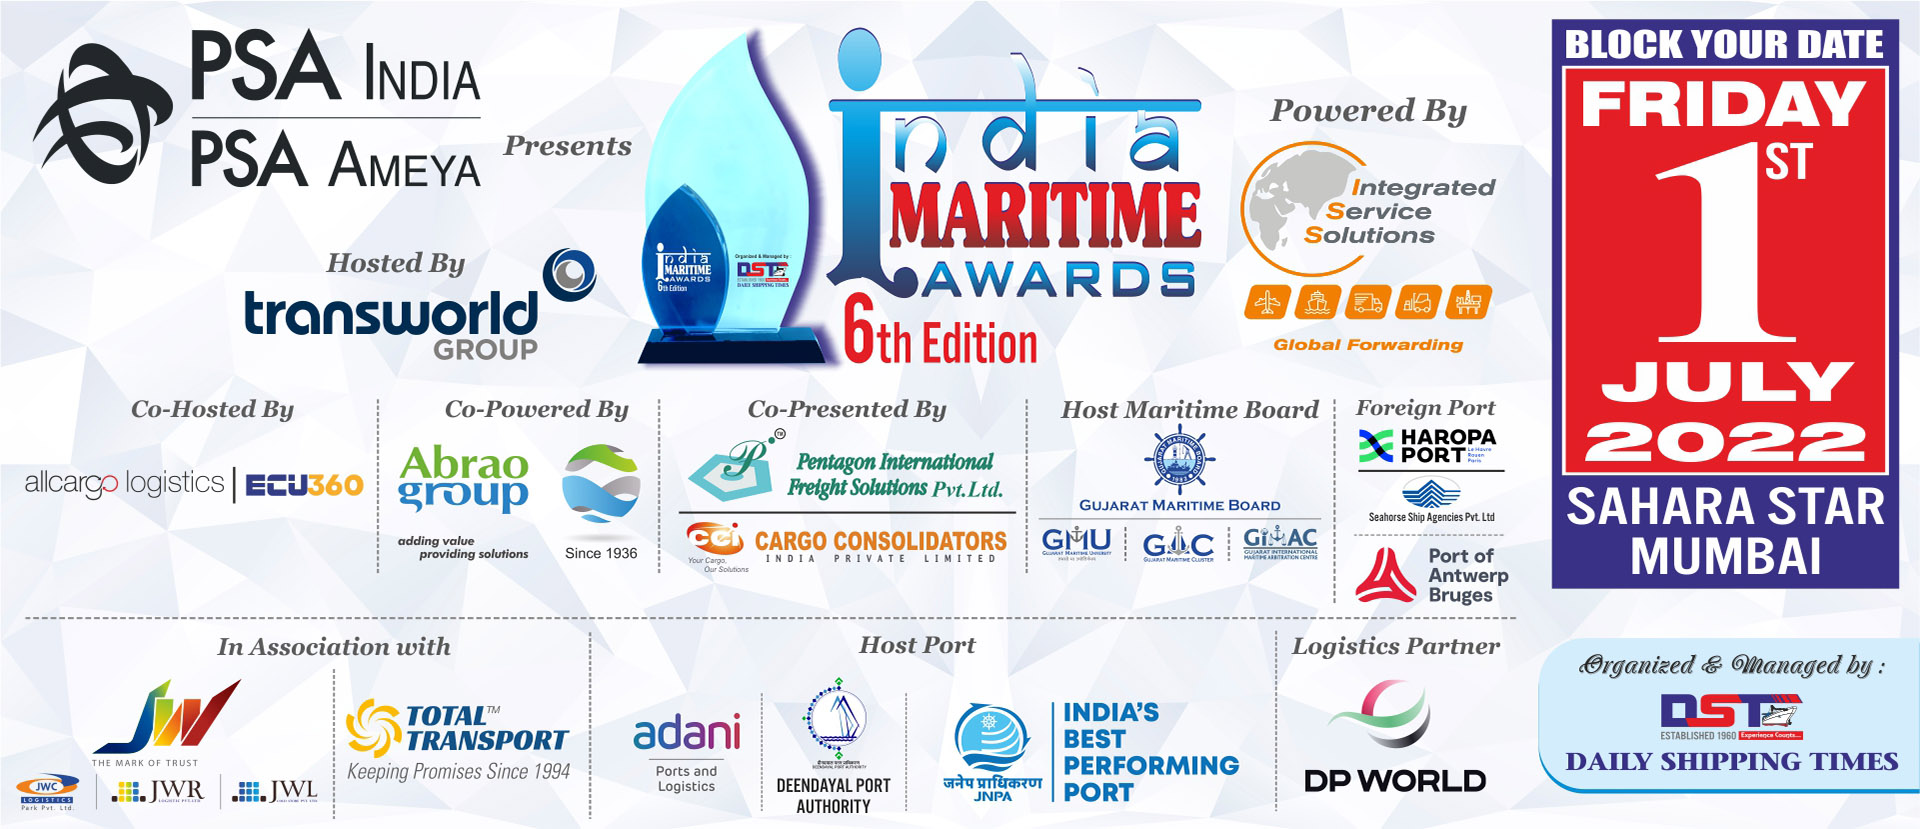 India Maritime Awards - 6th Edition